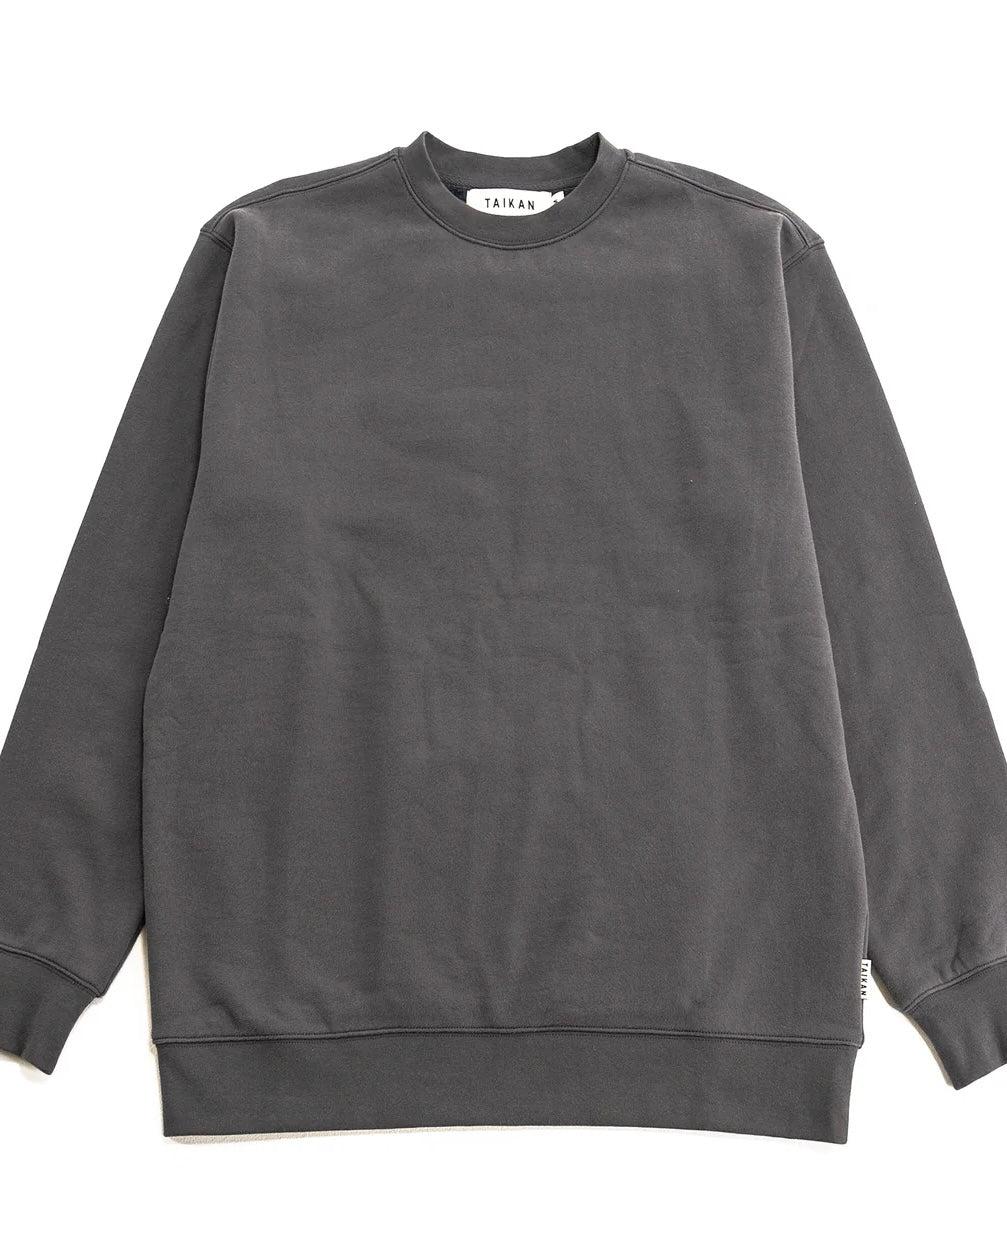 Taikan Custom Crew Sweatshirt in Charcoal